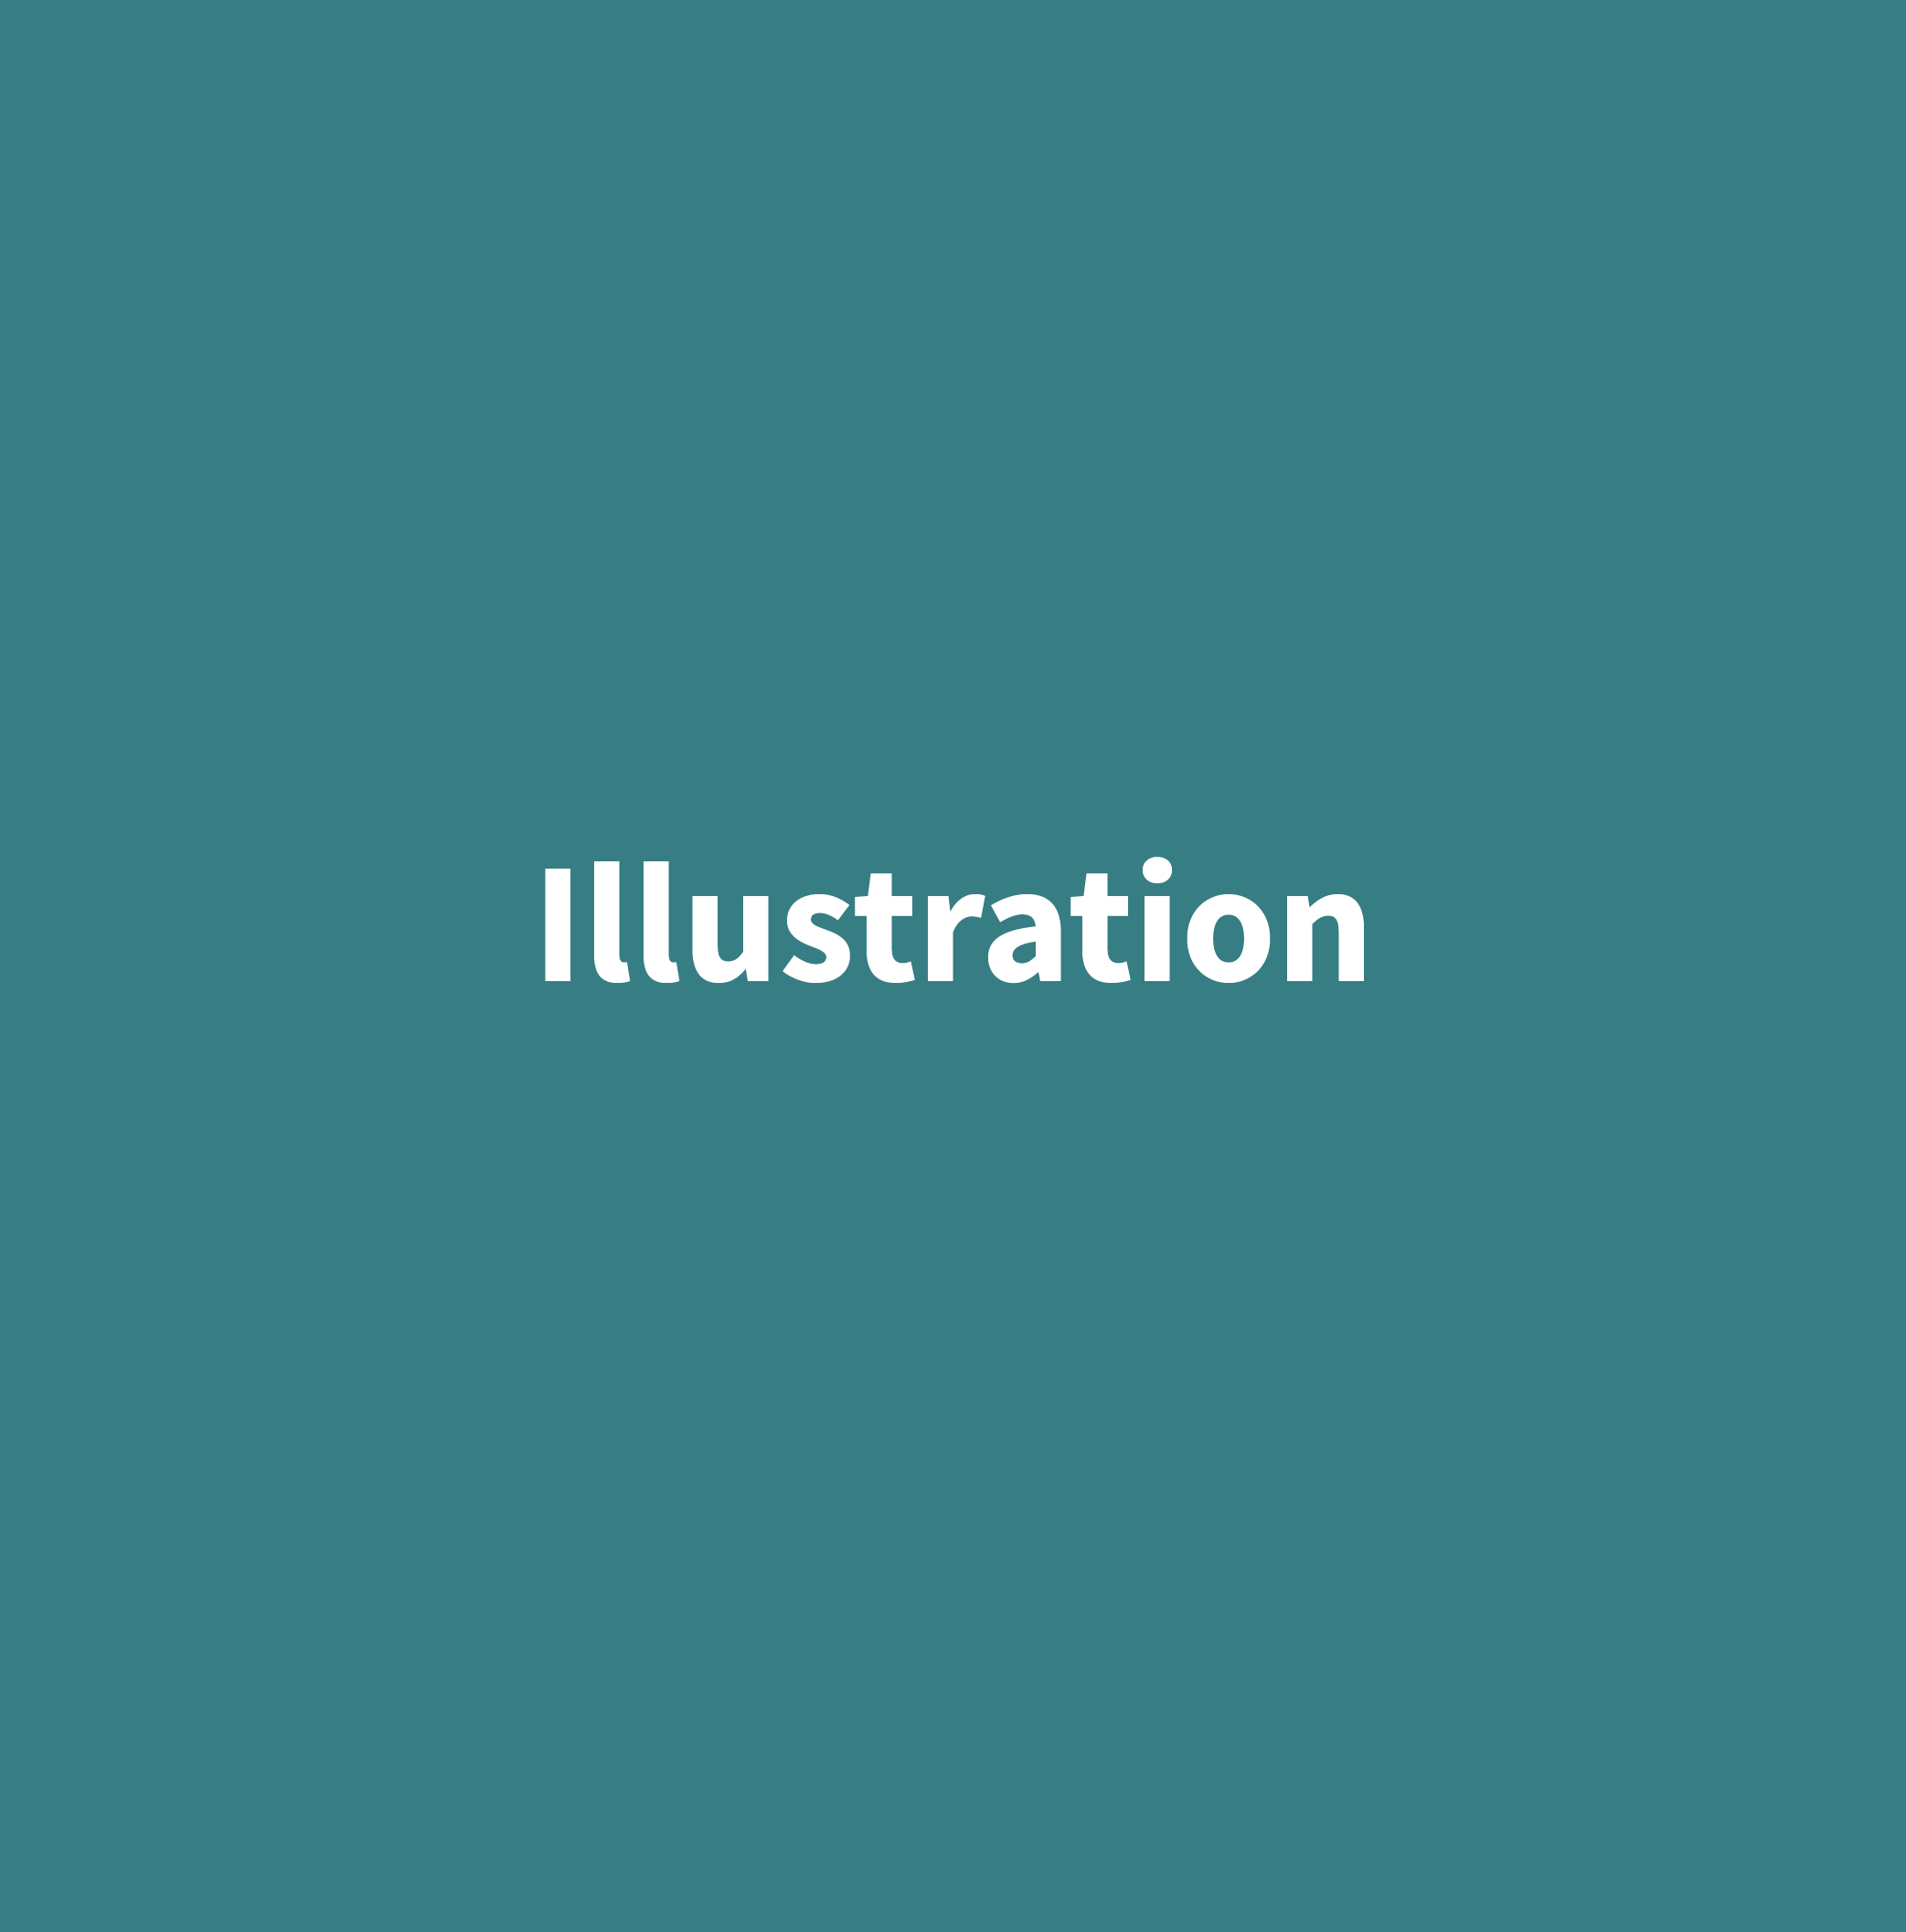 design showing the word illustration